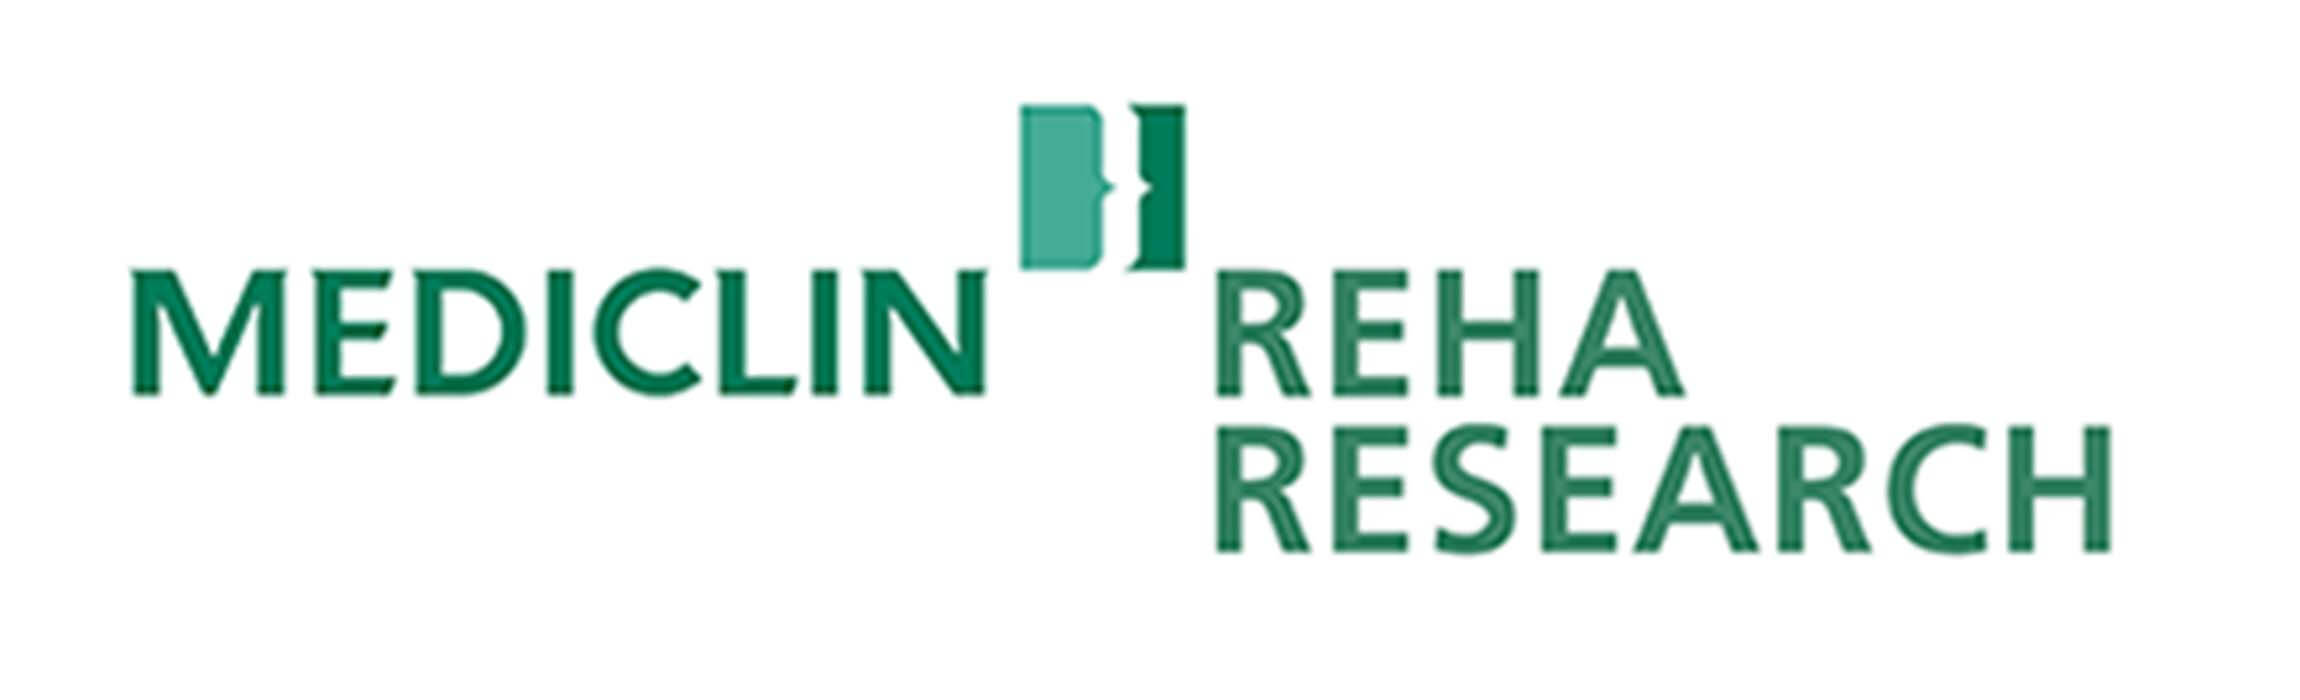 MEDICLIN Reha Research